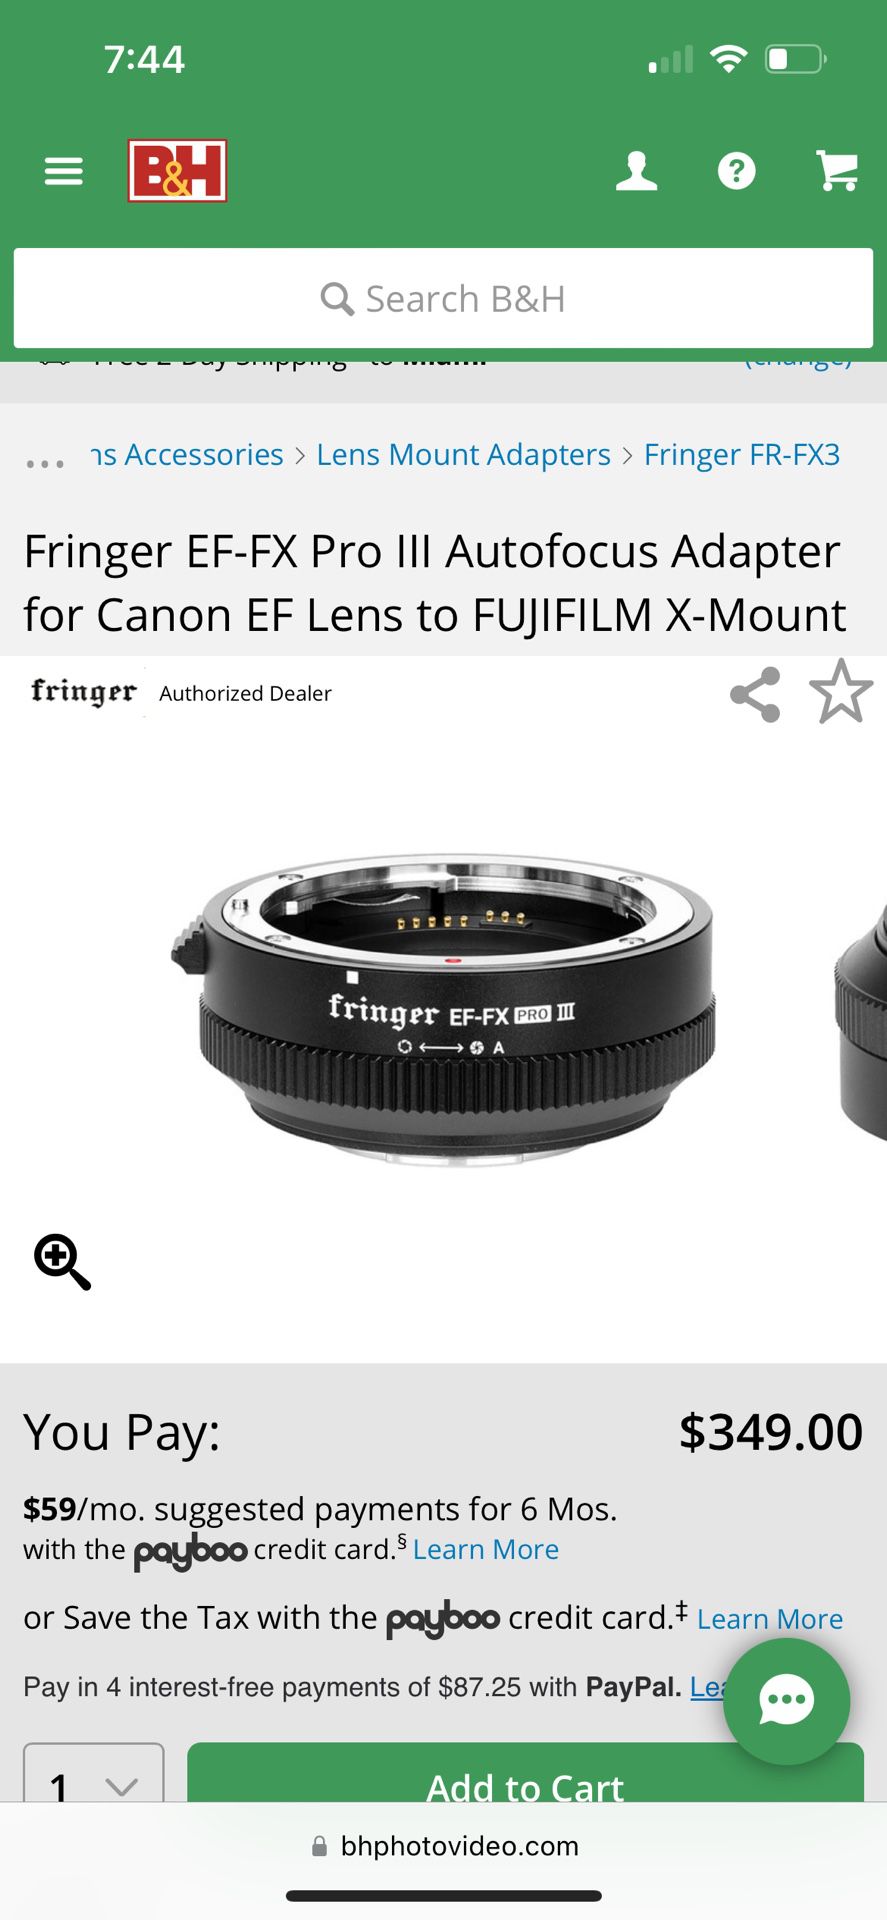 Fringer EF to X Mount Pro Ii Adapter